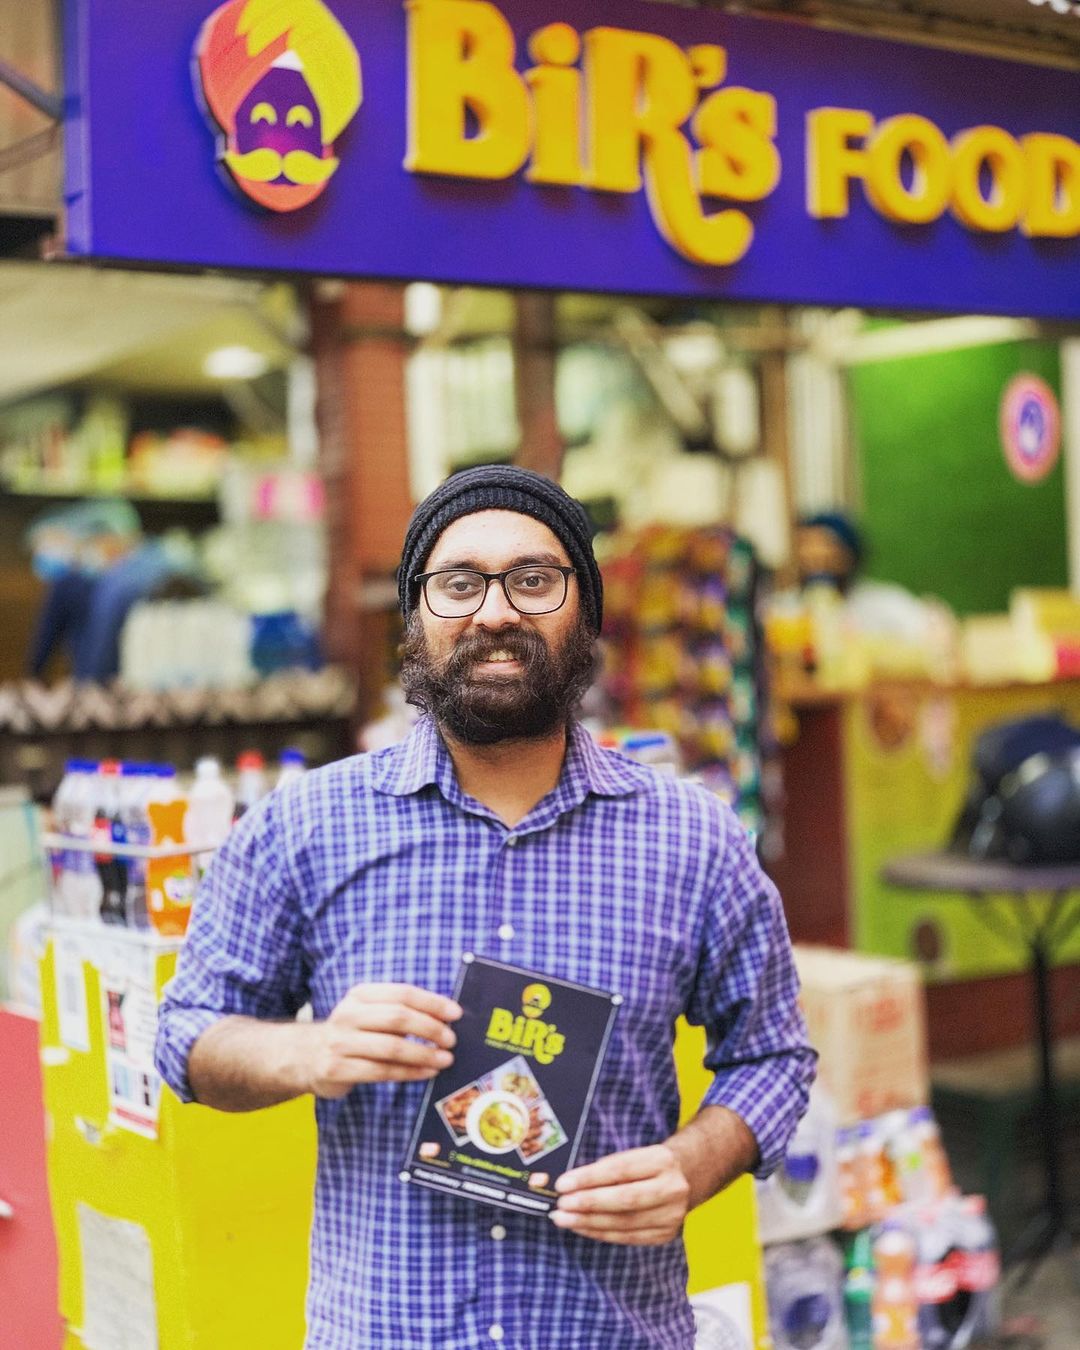 Jasbir Singh Bhatia, Founder & CEO of BIR’s FOOD FACTORY